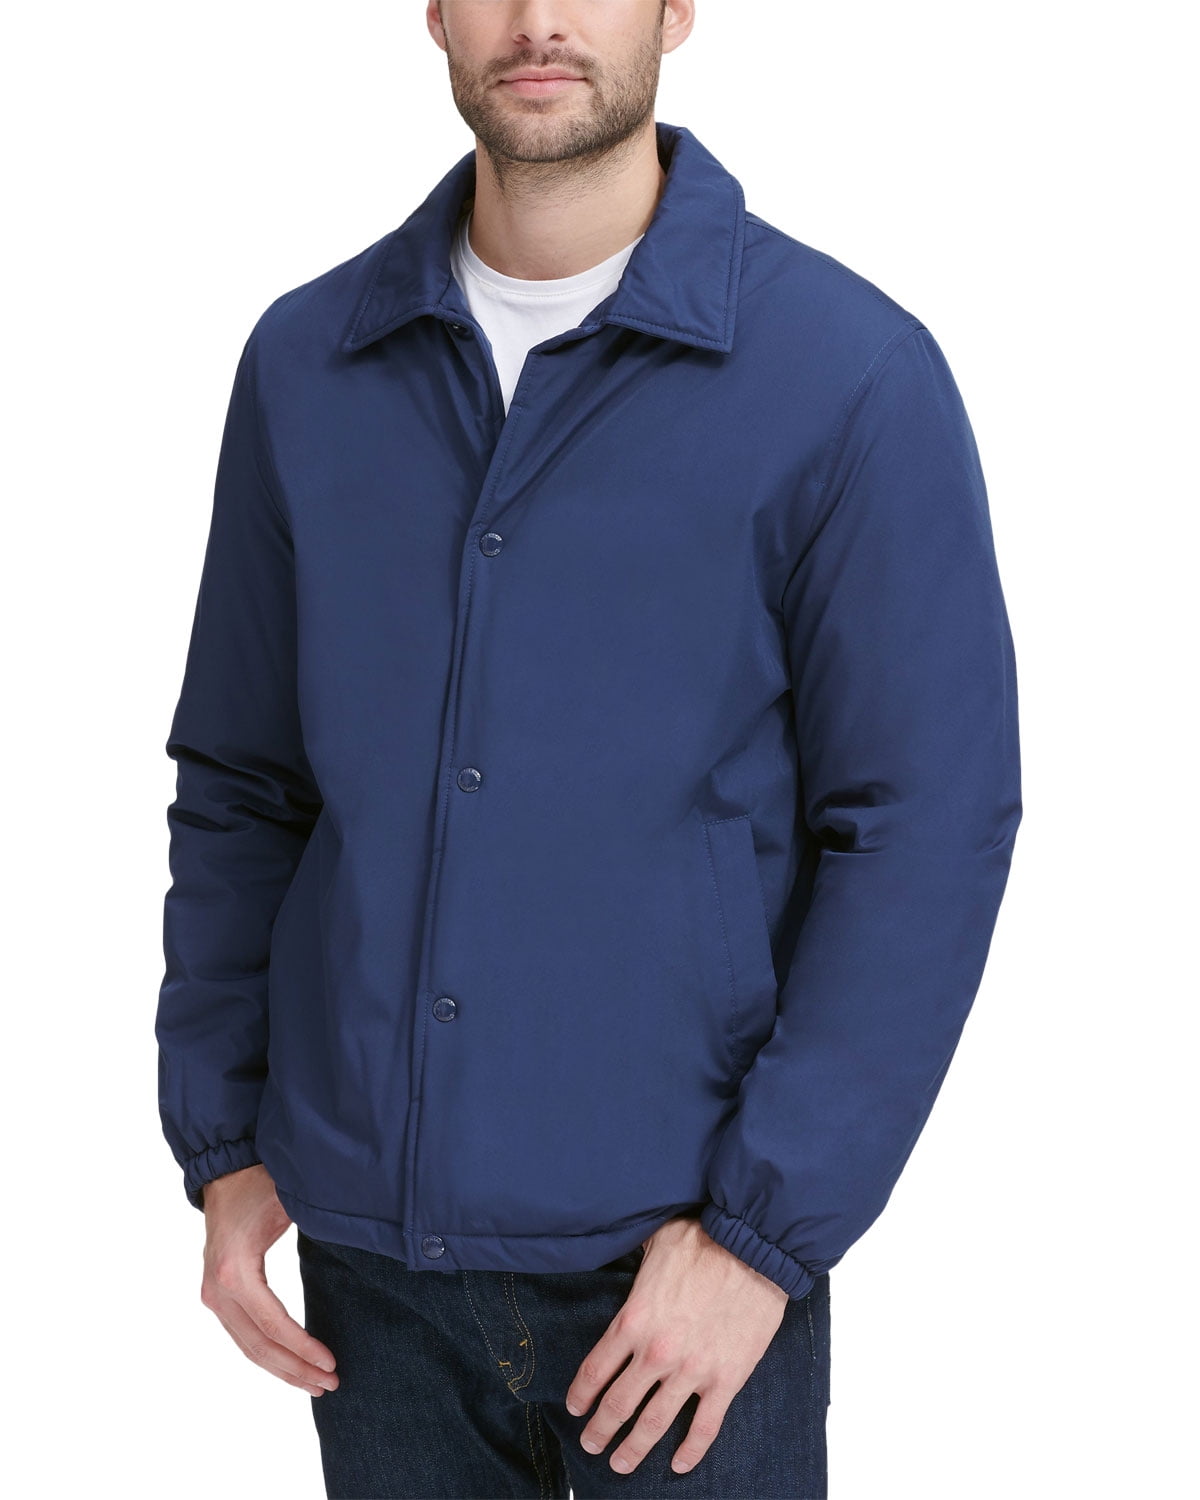 Fleece Jacket Wholesalers - Get Best Price from Manufacturers & Suppliers  in India